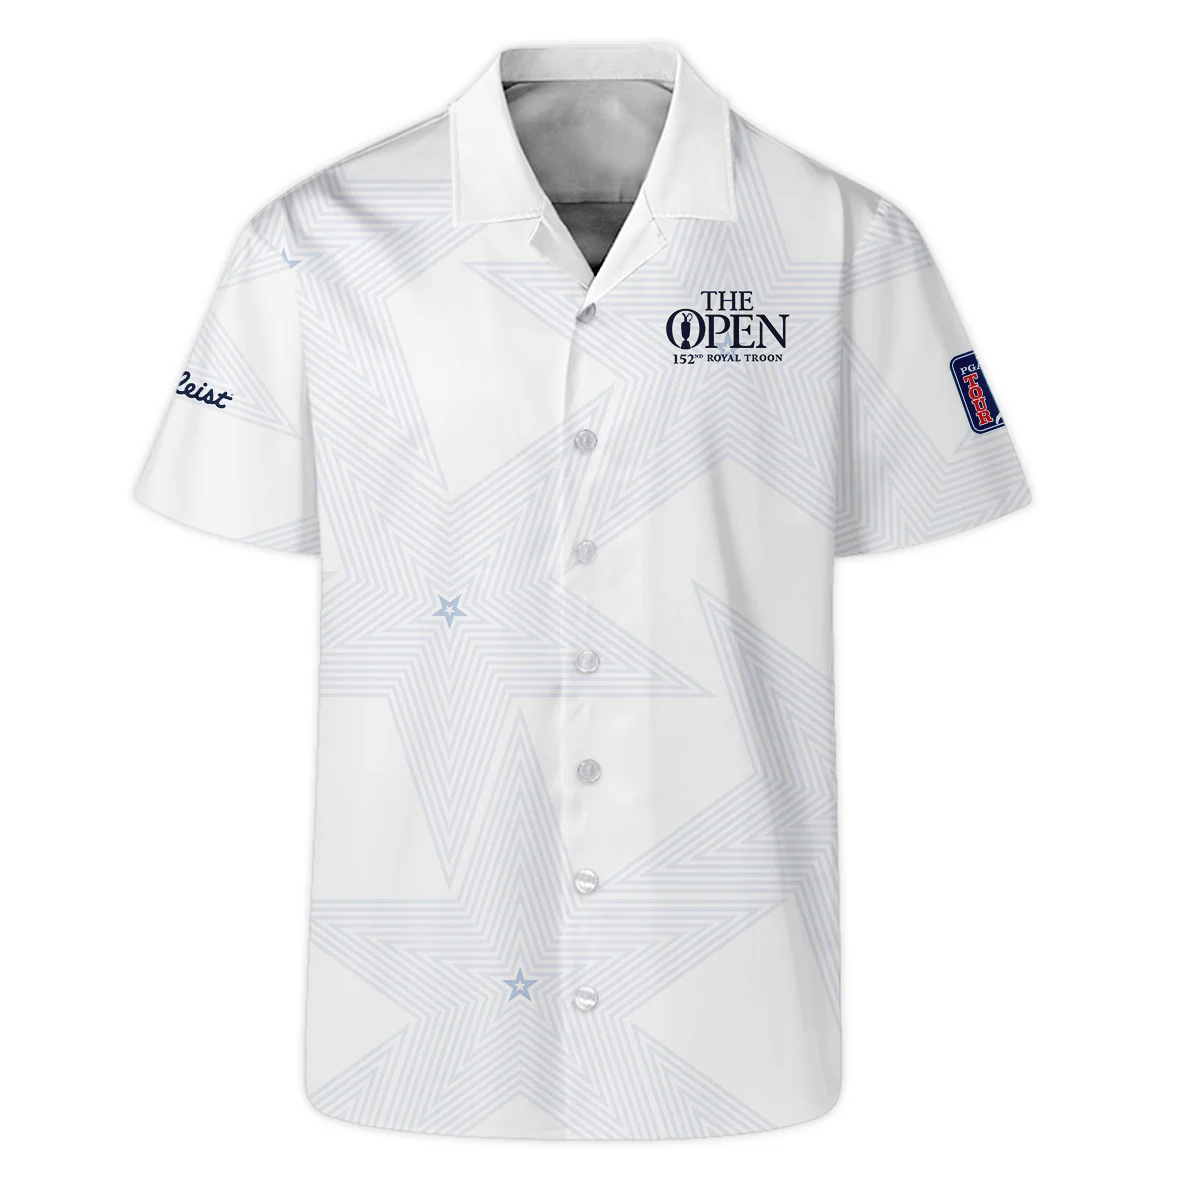 152nd The Open Championship Golf Titleist Hoodie Shirt Stars White Navy Golf Sports All Over Print Hoodie Shirt